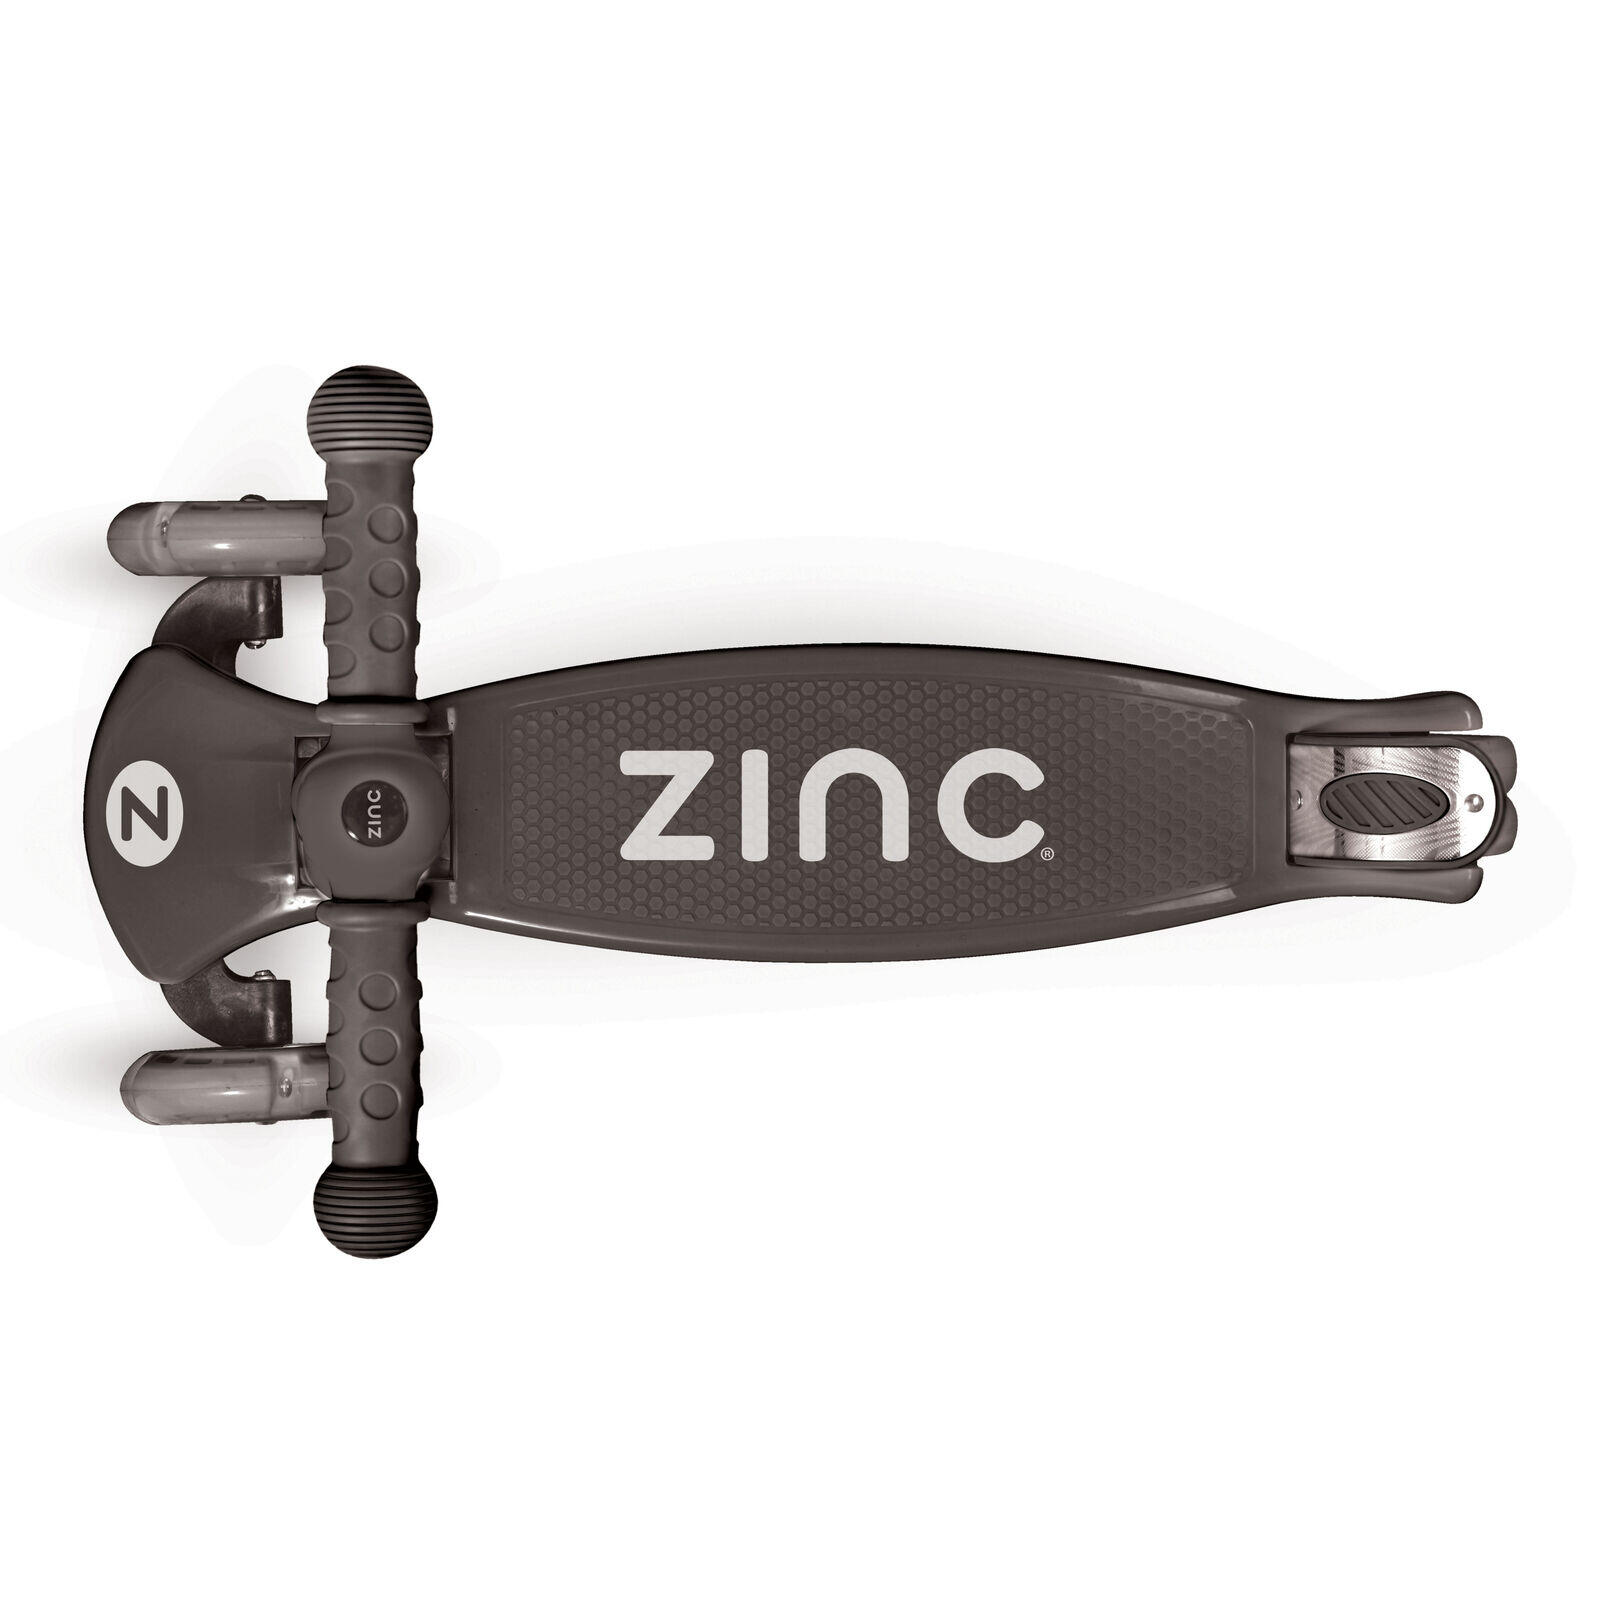 Zinc T-motion Three Wheeled Scooter - Black 4/4